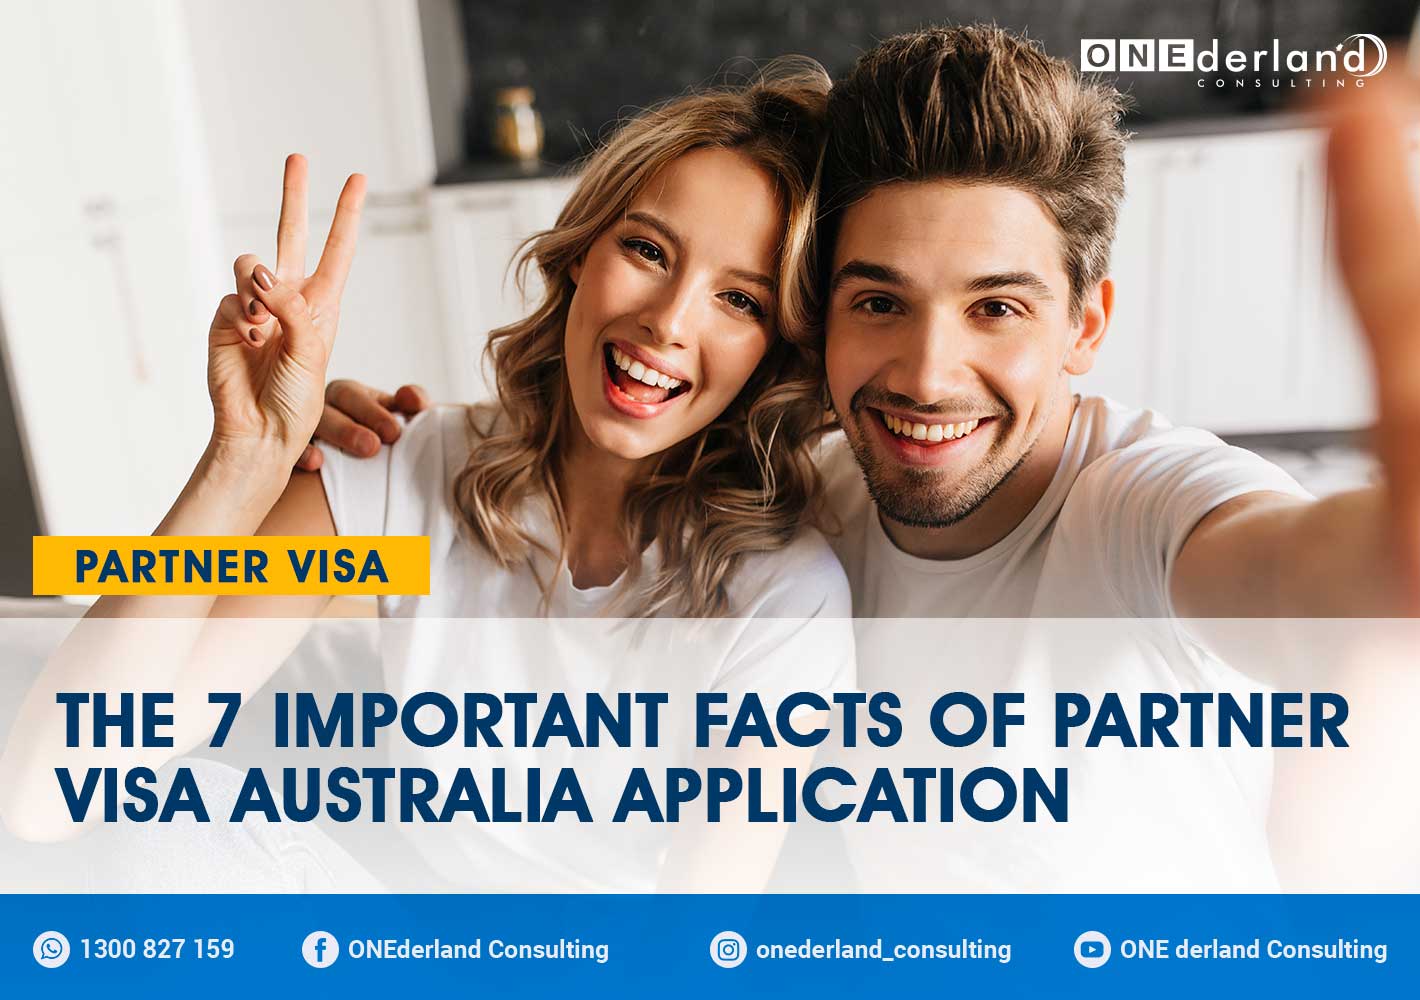 The 7 Important Facts of Partner Visa Australia Application